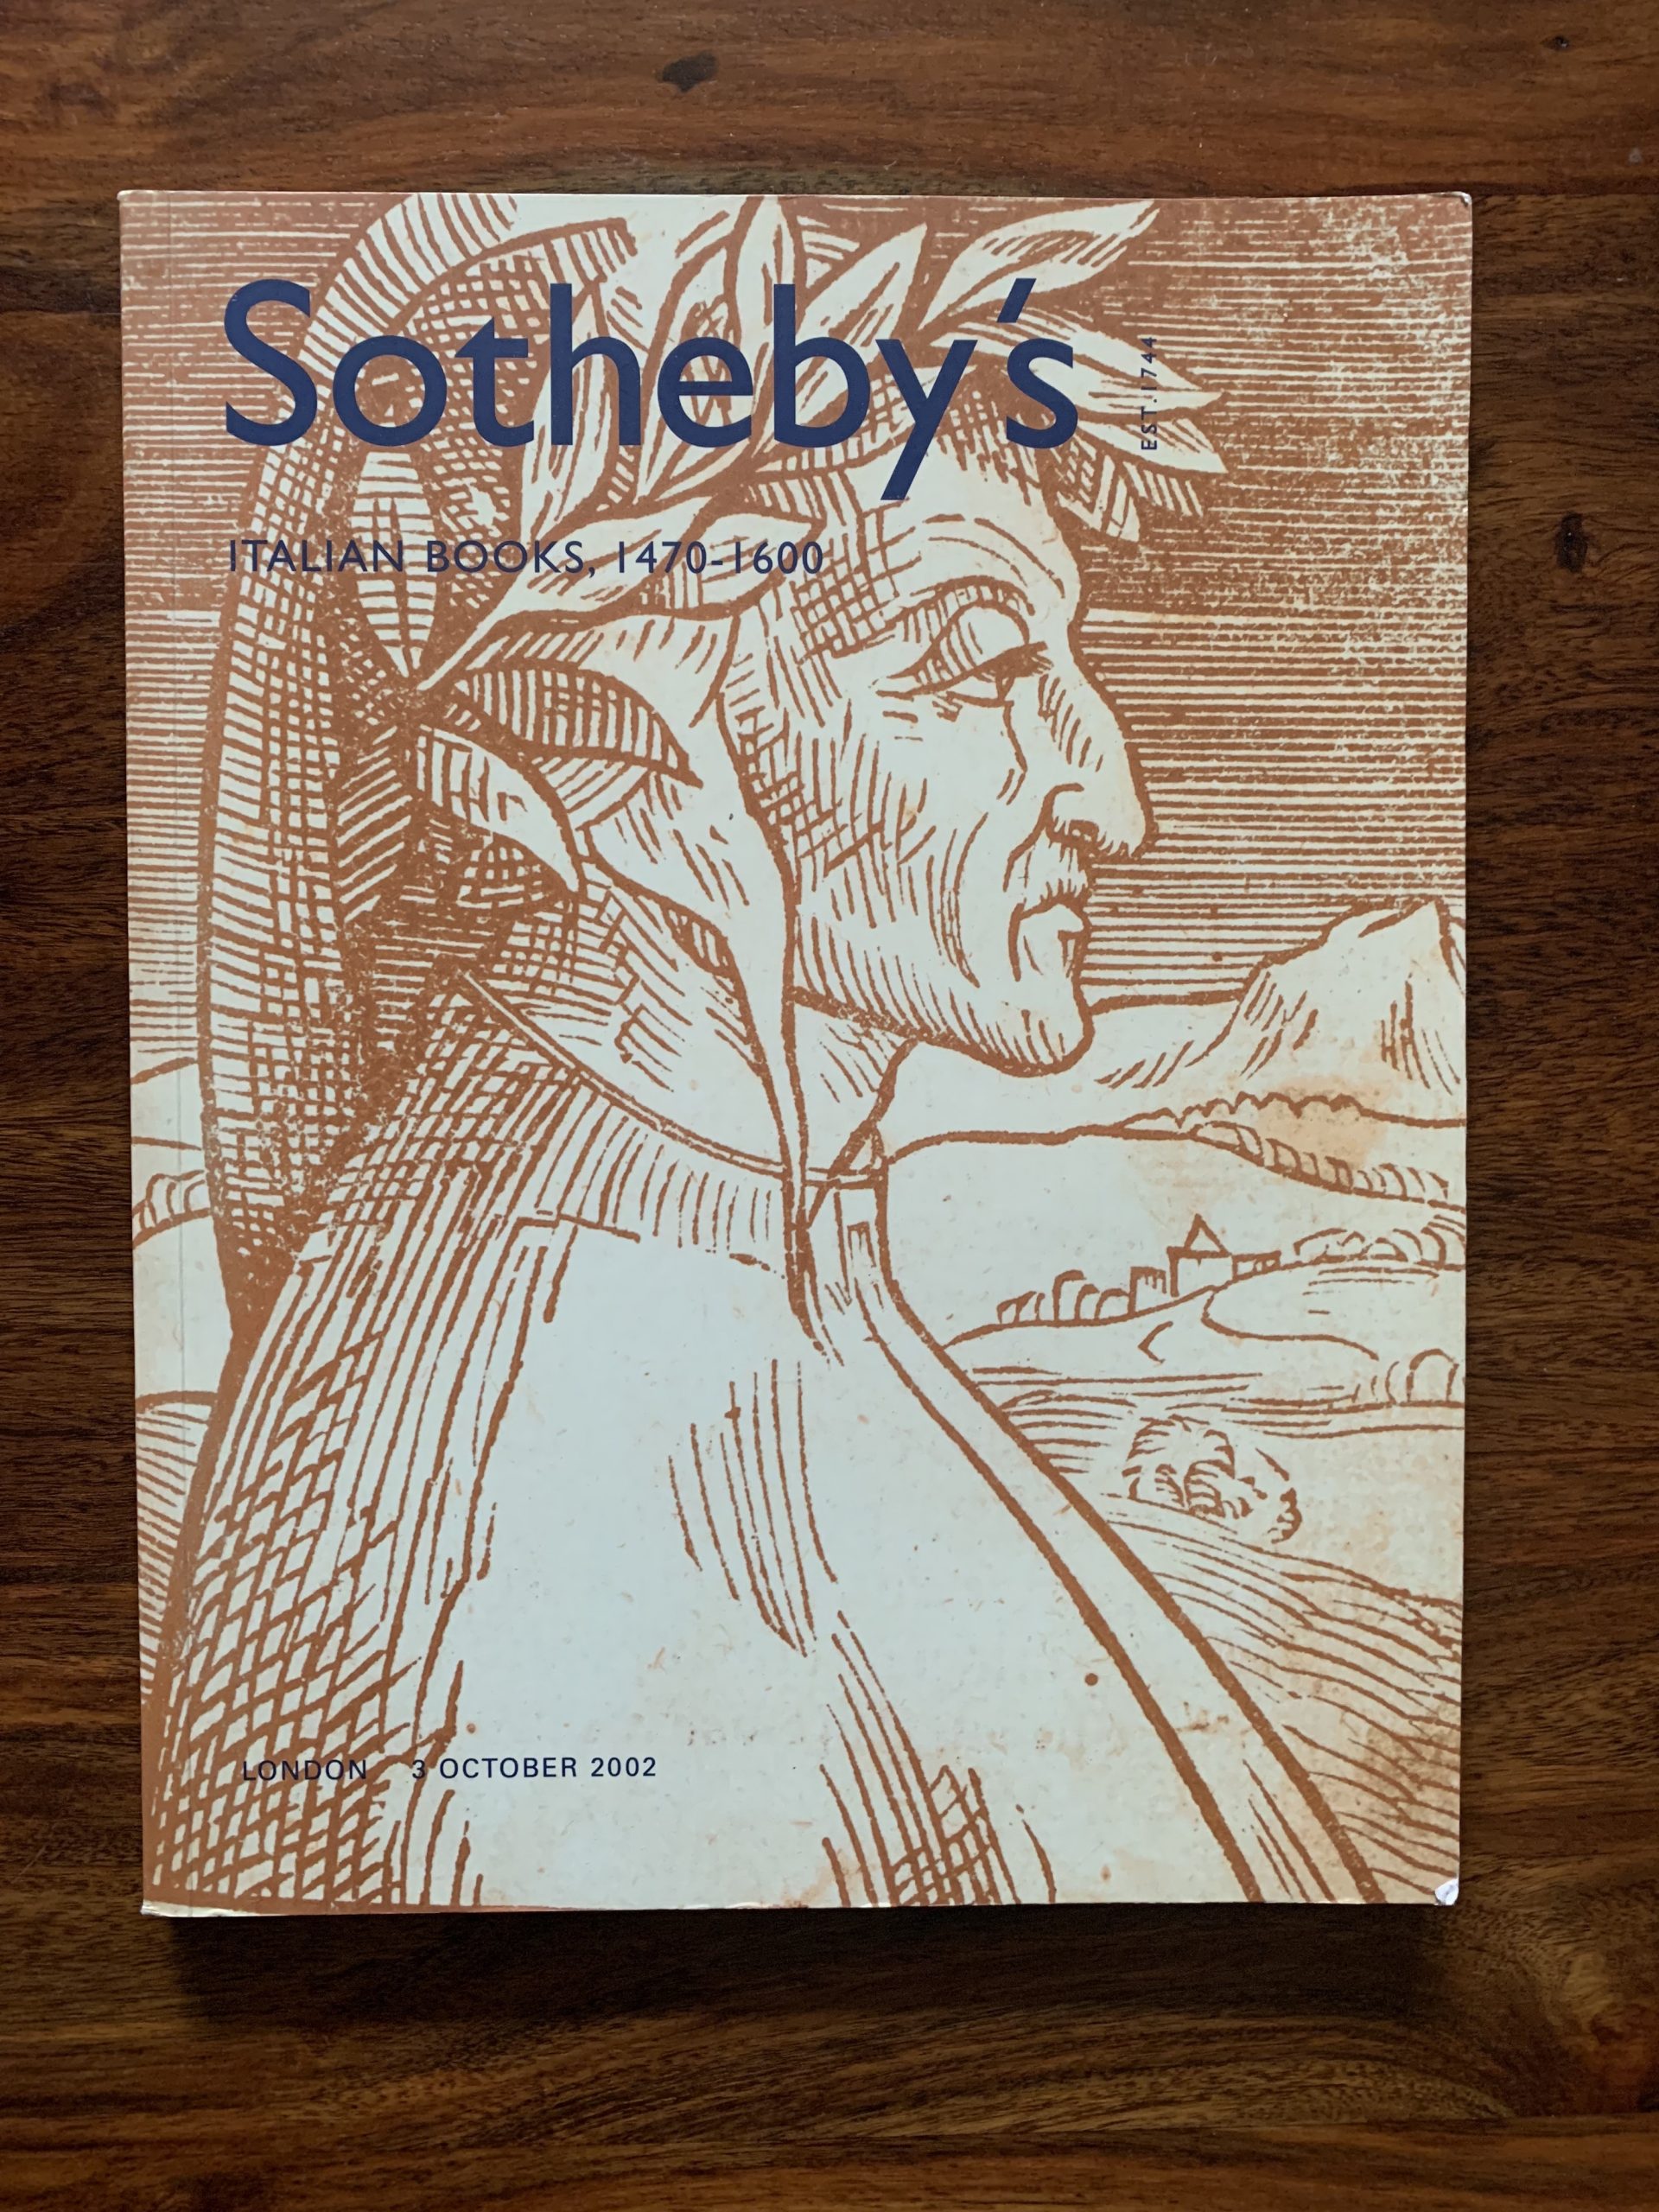 Sotheby’s. Italian books, 1470-1600.